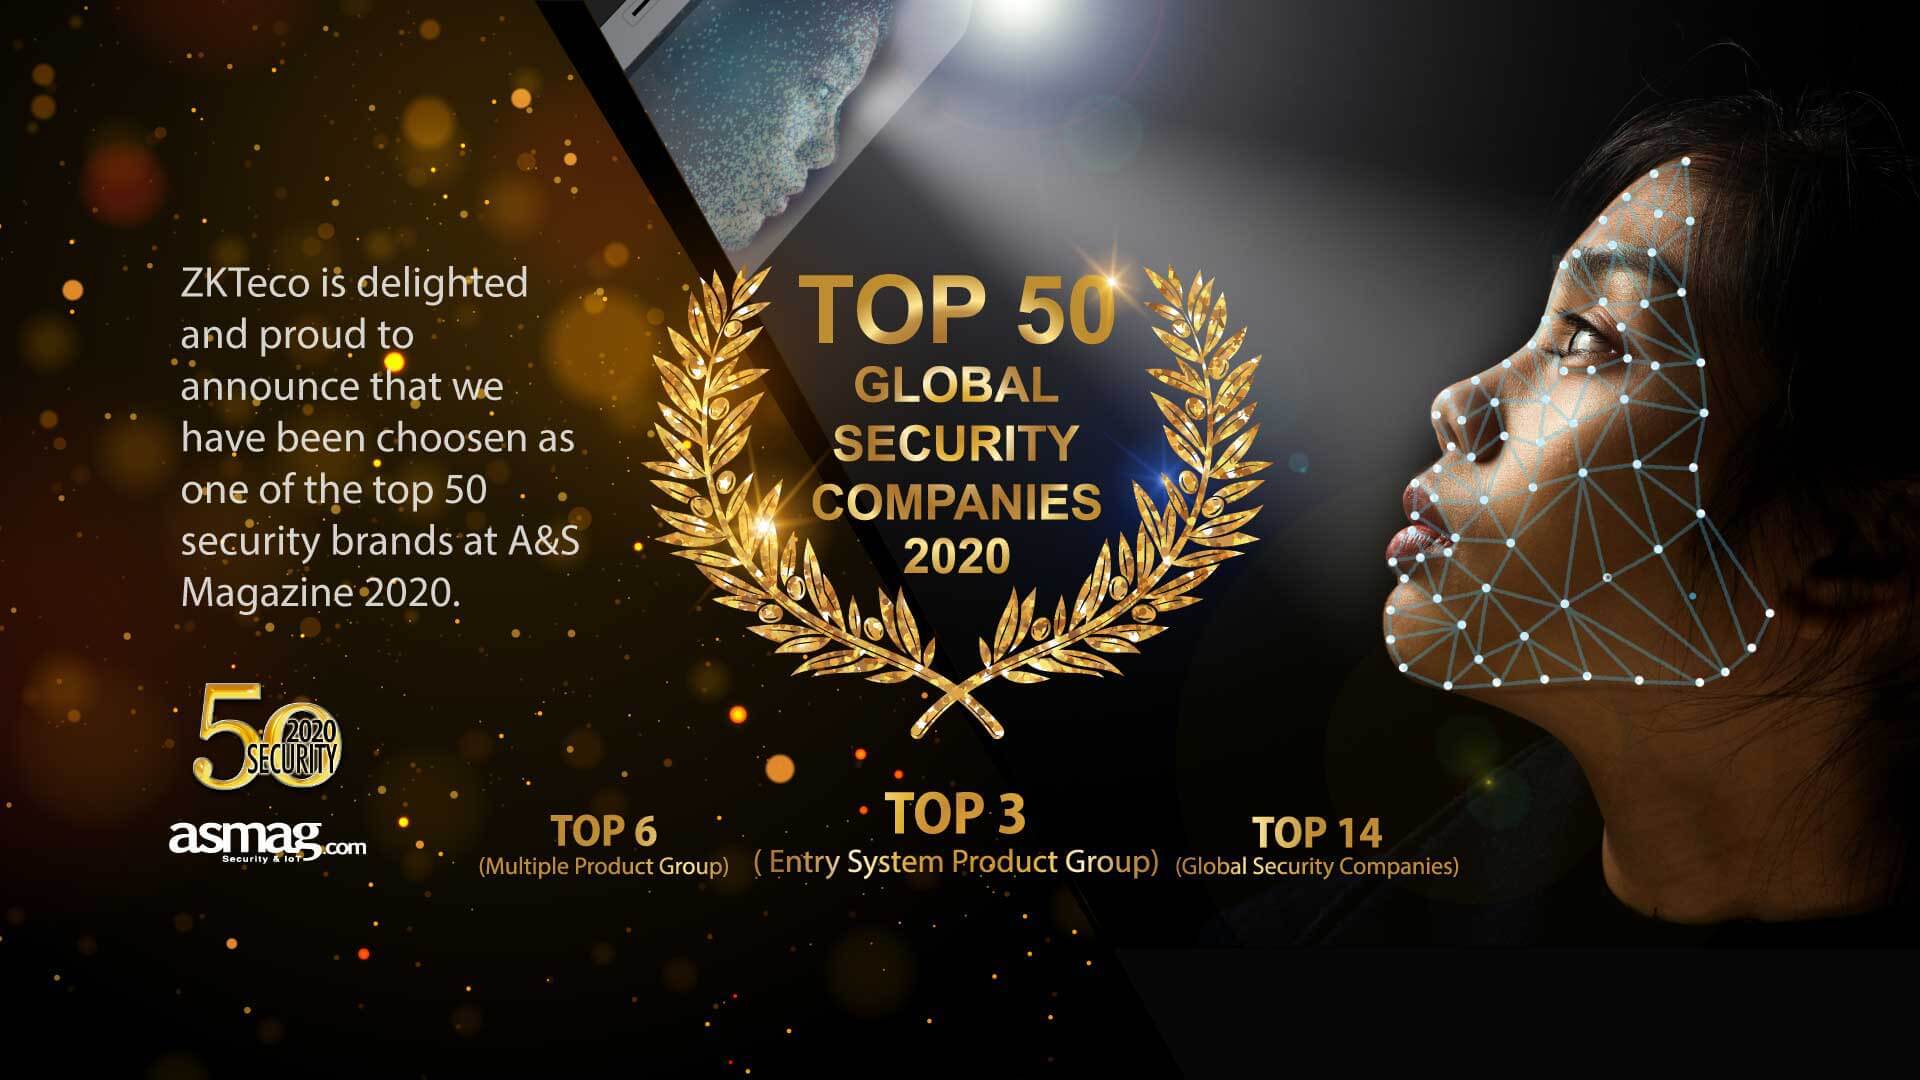 a&s International誌2020世界セキュリティ企業TOP50